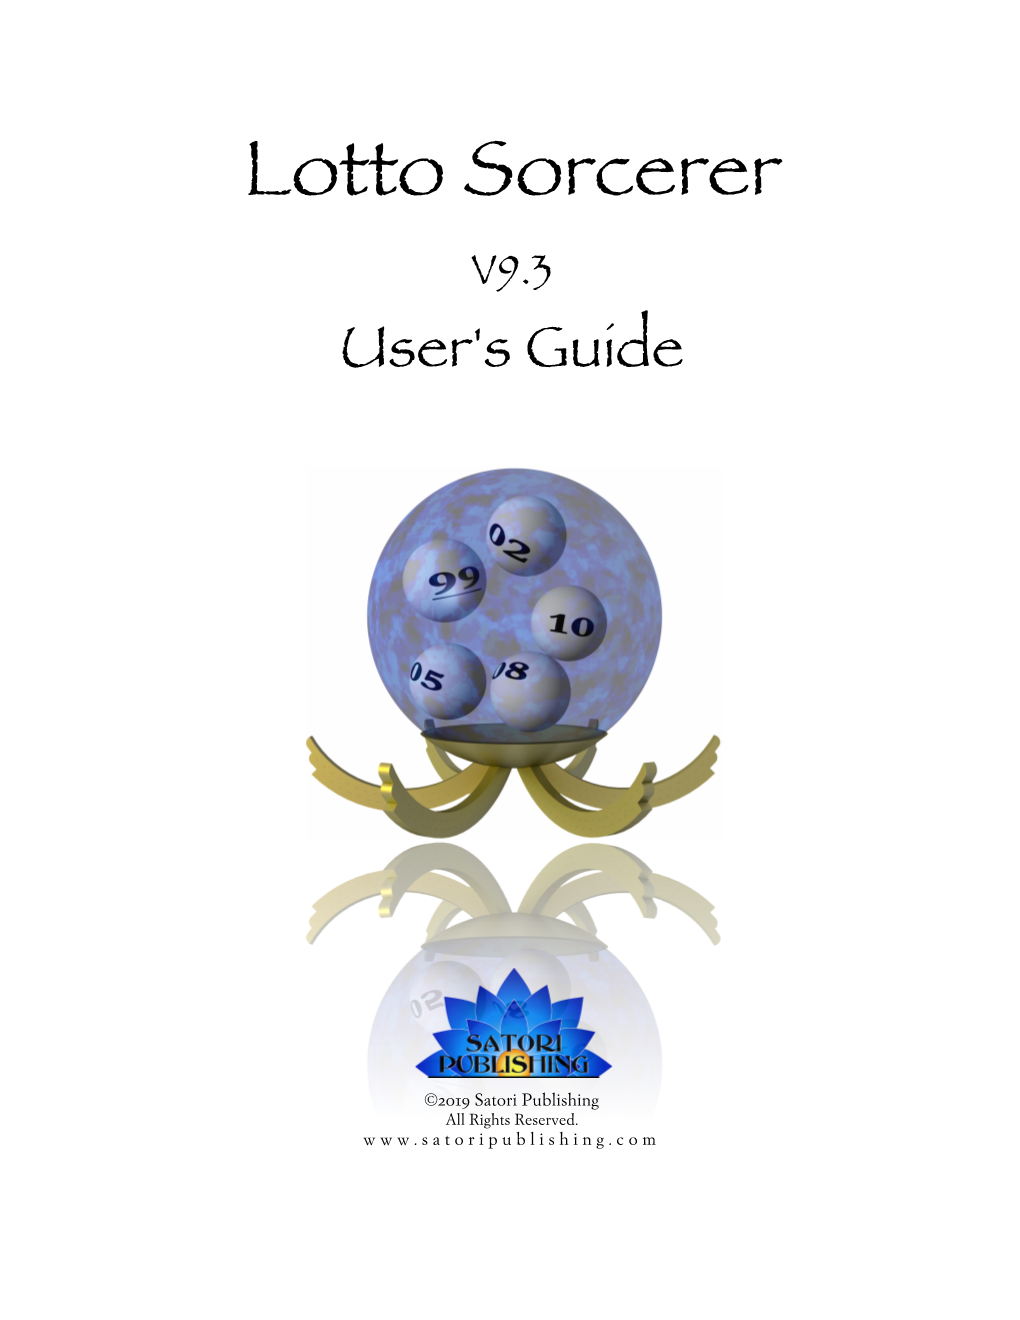 Lotto Sorcerer User's Guide